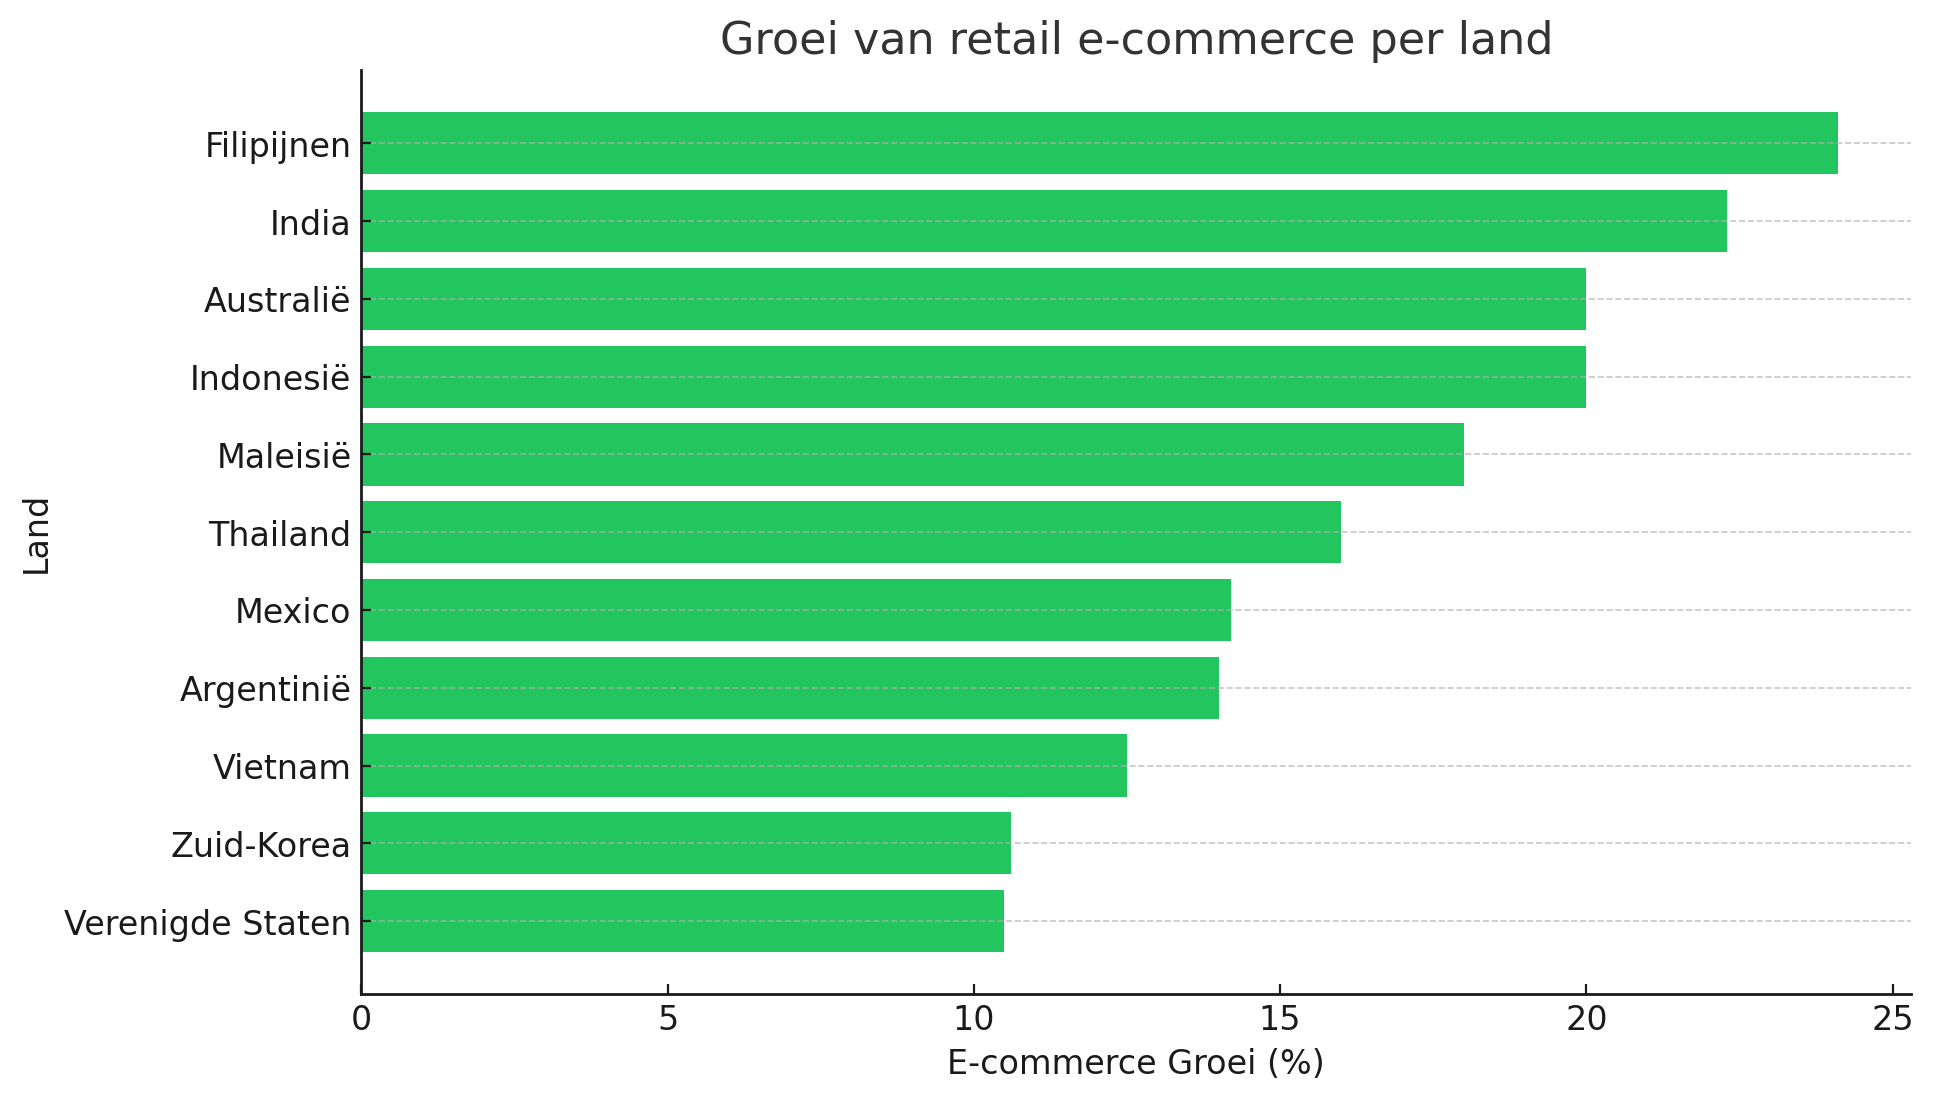 Groei van retail e-commerce per land